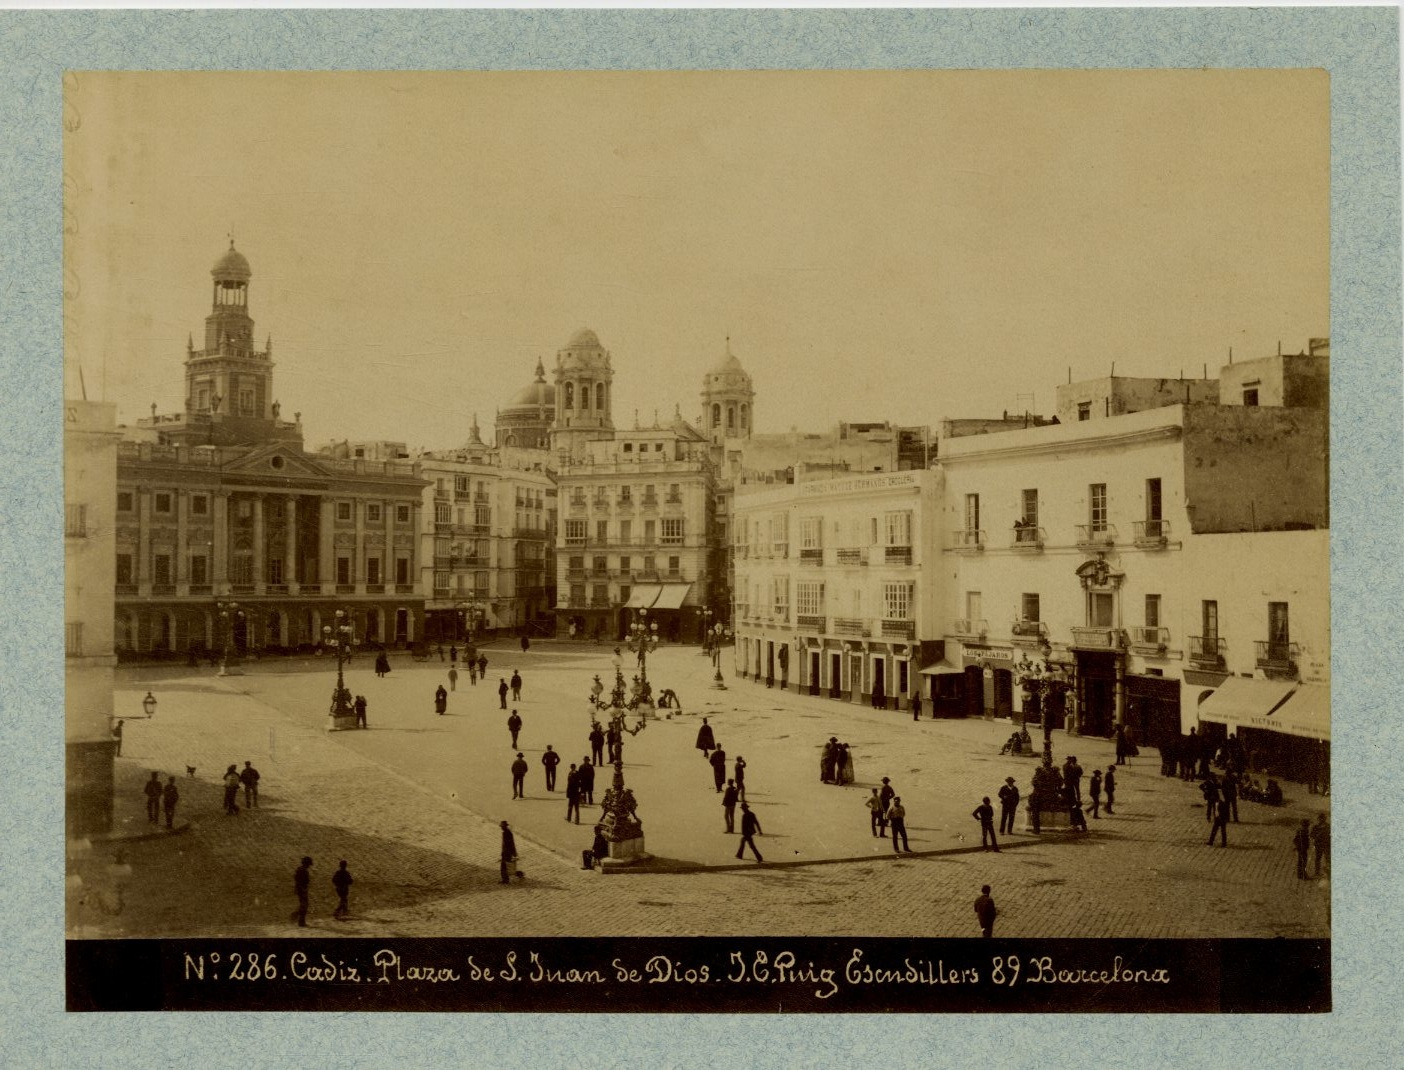 Spain, Cadiz, Plaza de S. Juan de Dios Vintage Albumen Print. Spain Draw a